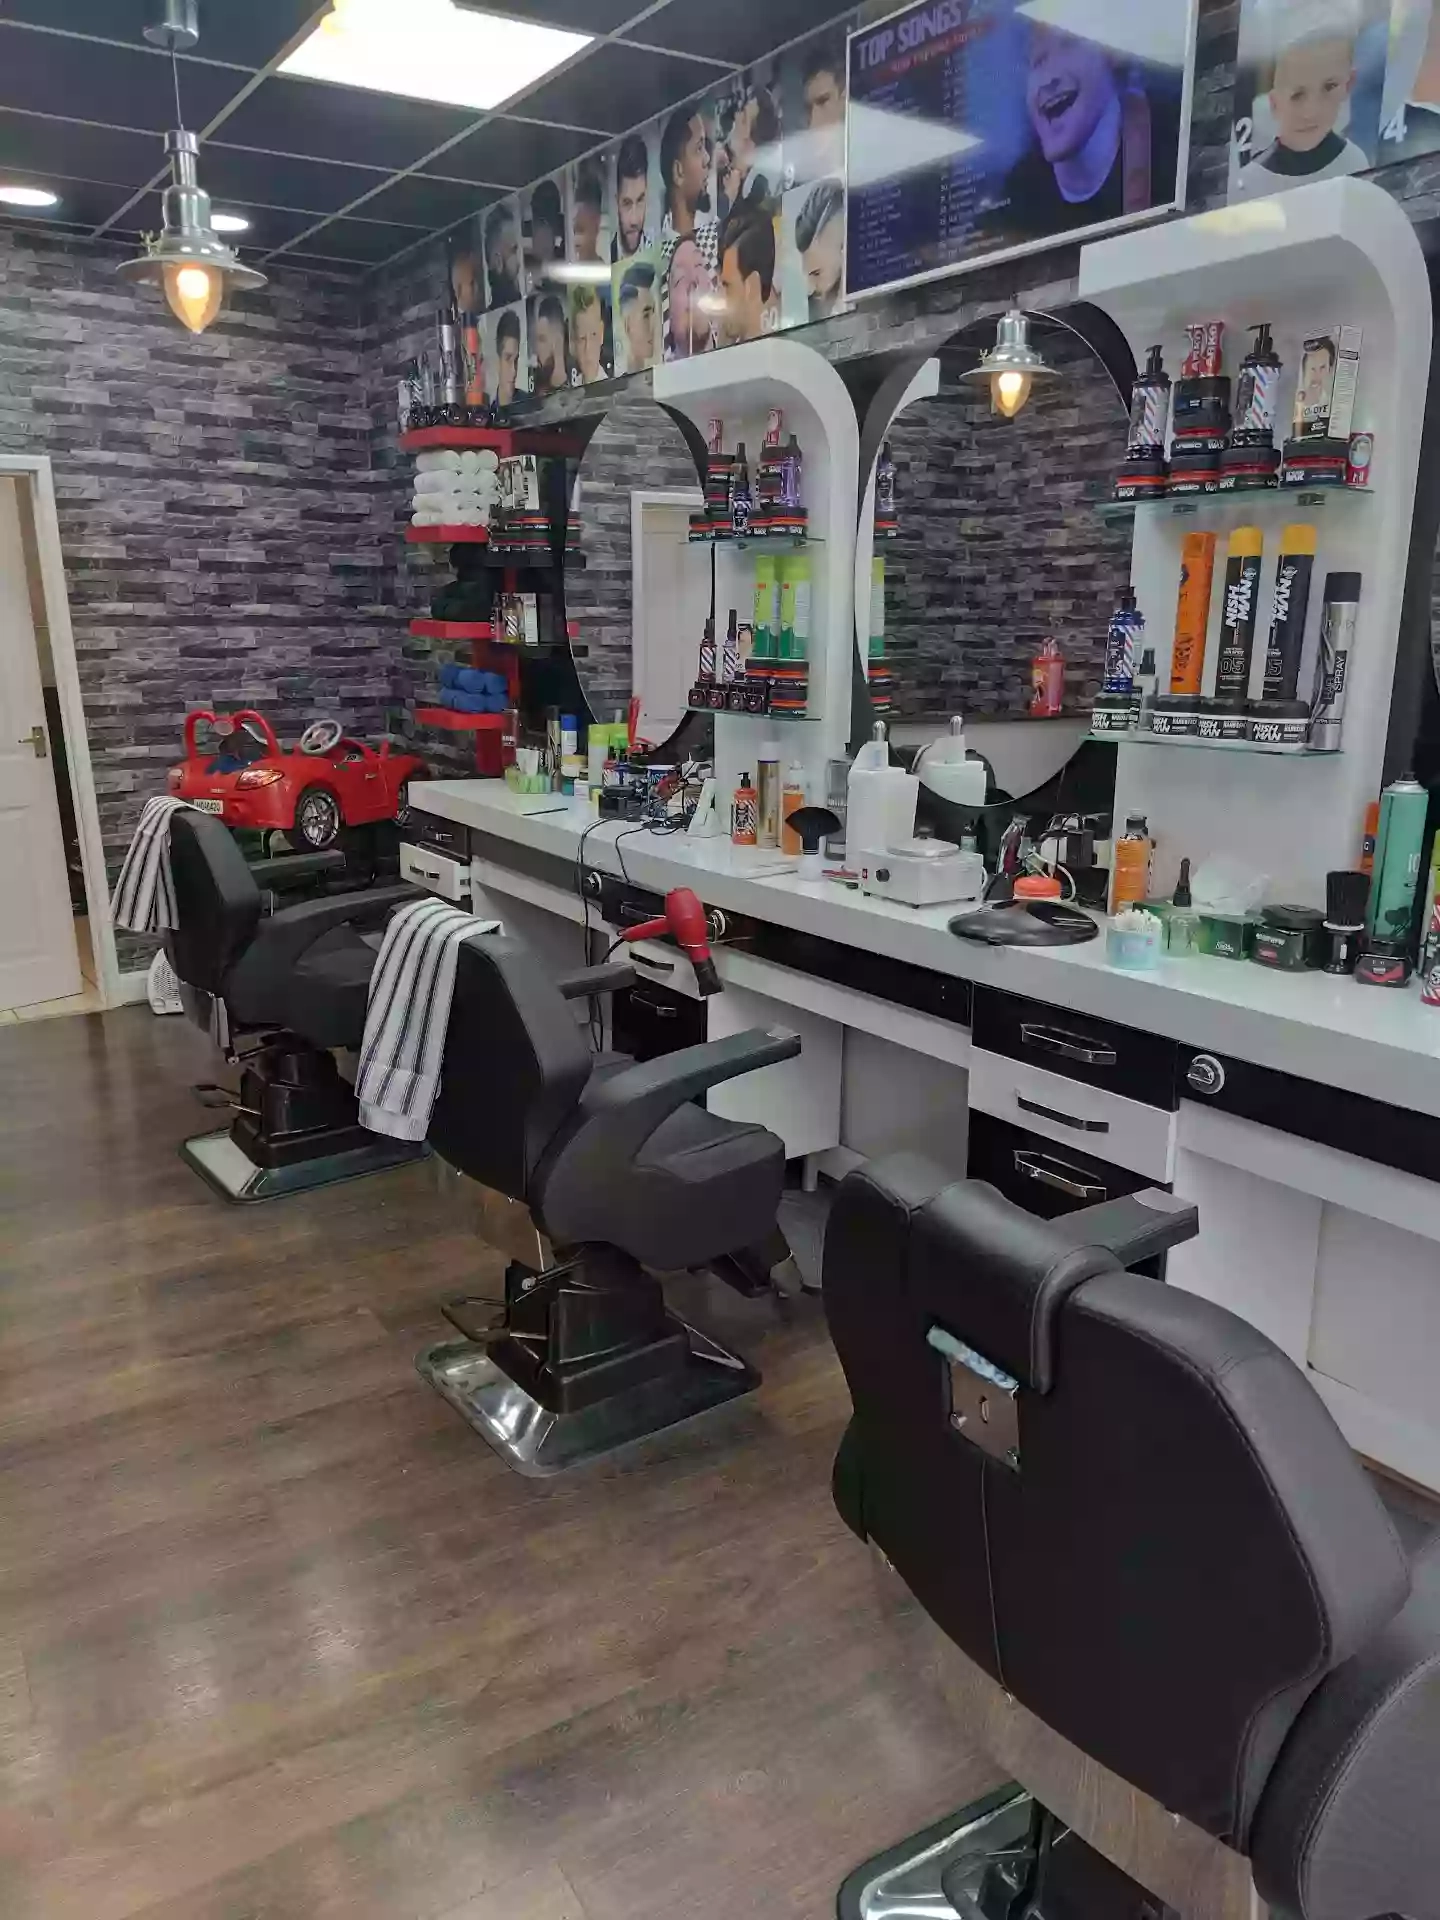 Danns Barbershop